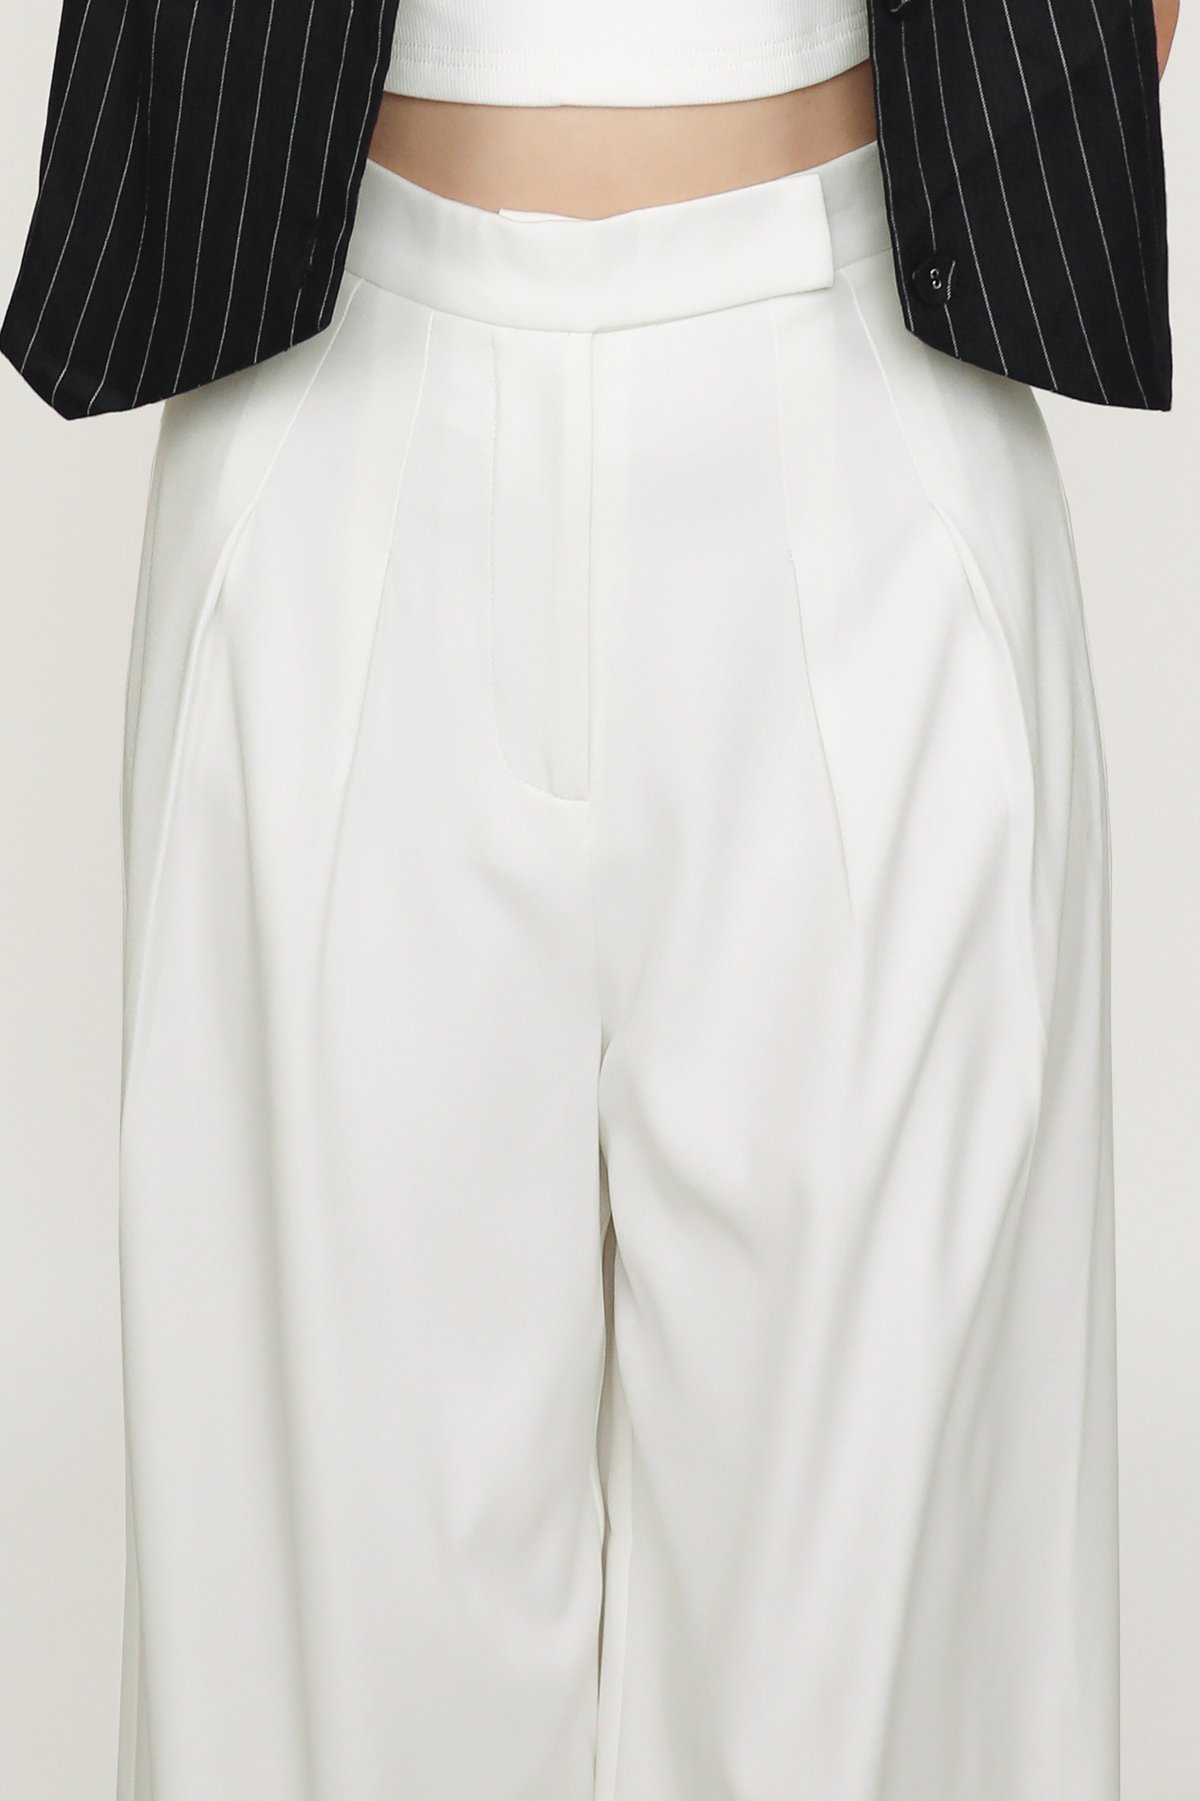 Braydon Hook Front Pants (White)